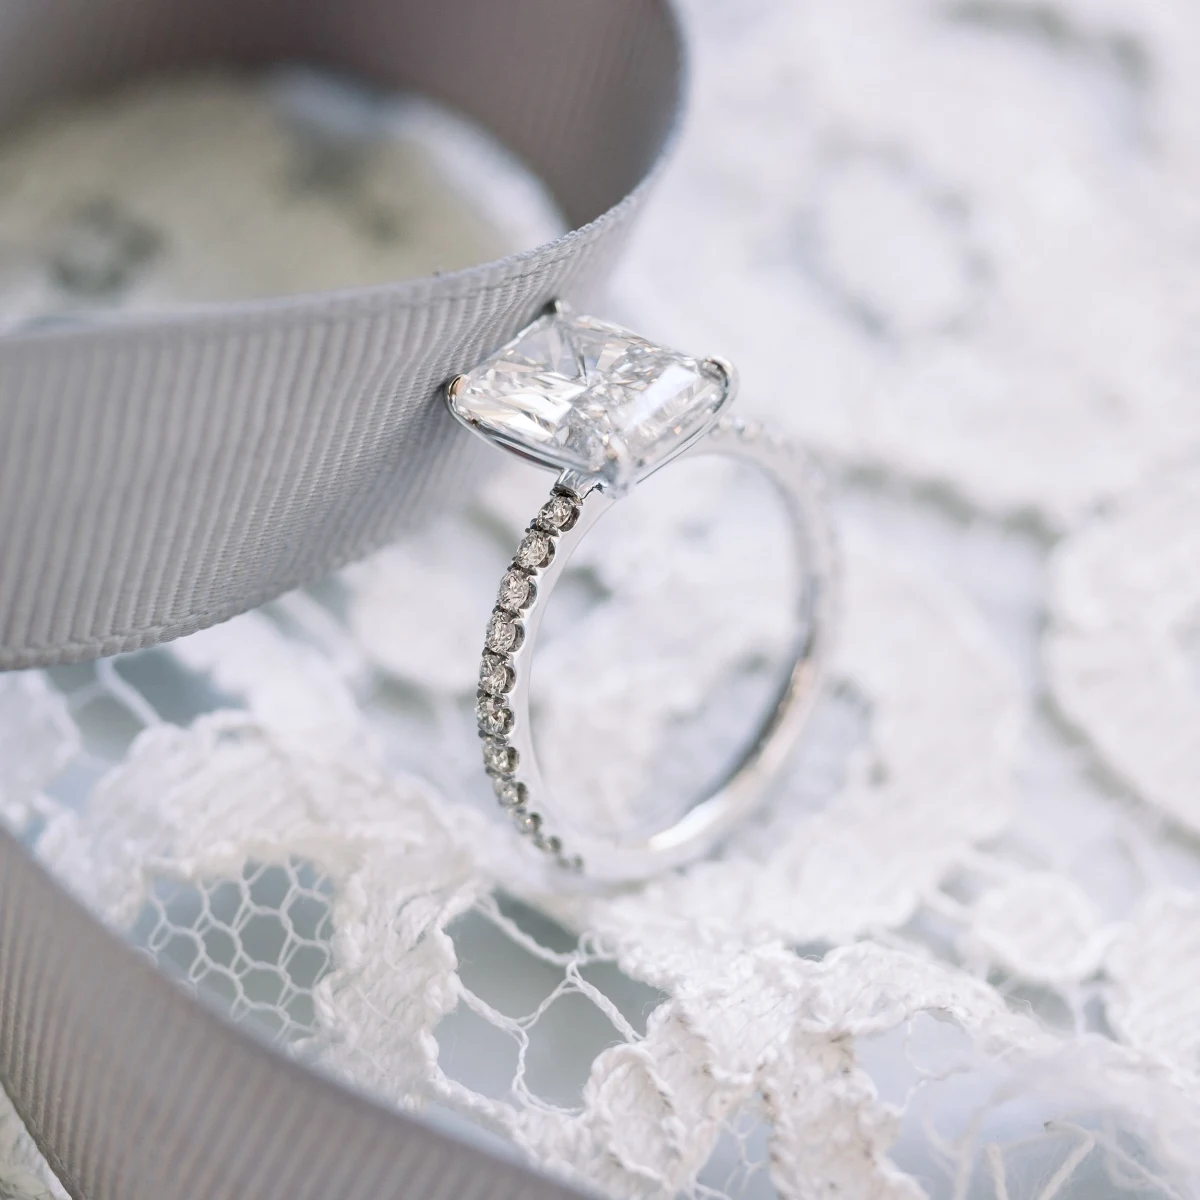 Diamond Engagement Ring Setting